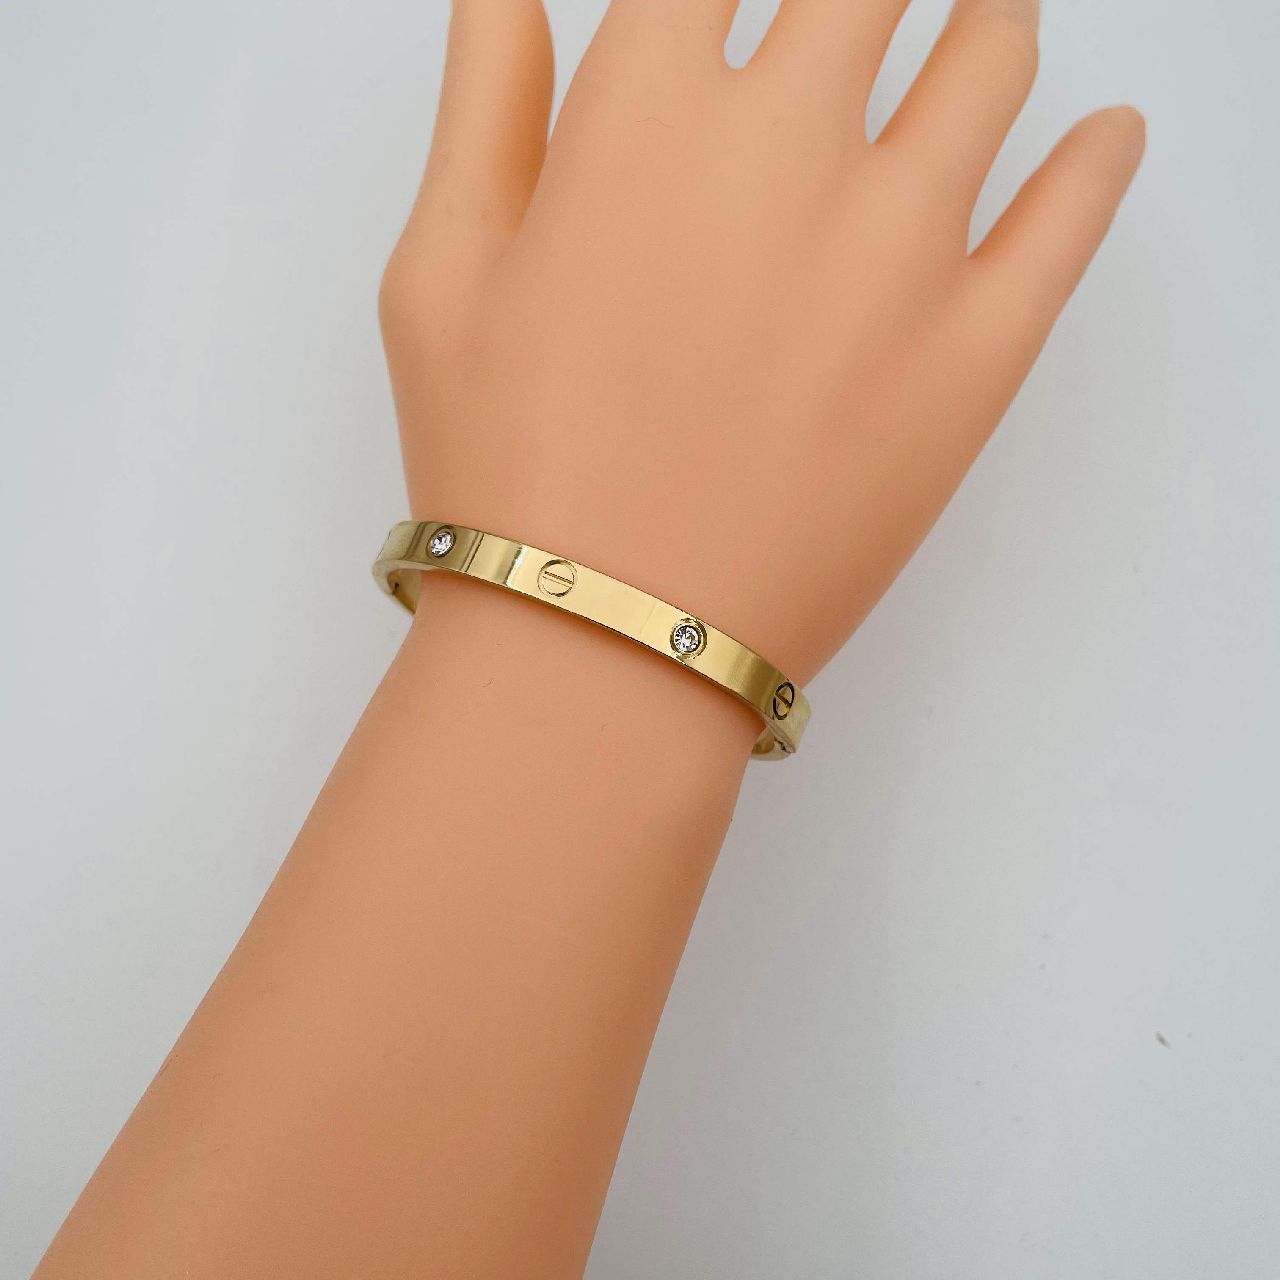 Buy 22k Gold Bracelet Kada for Unisex, Yellow Gold Bracelet Indian Gold  Jewelry, Engraved Bracelet Gold Men, Birthday Gift, Royal Look Bangle  Online in India - Etsy